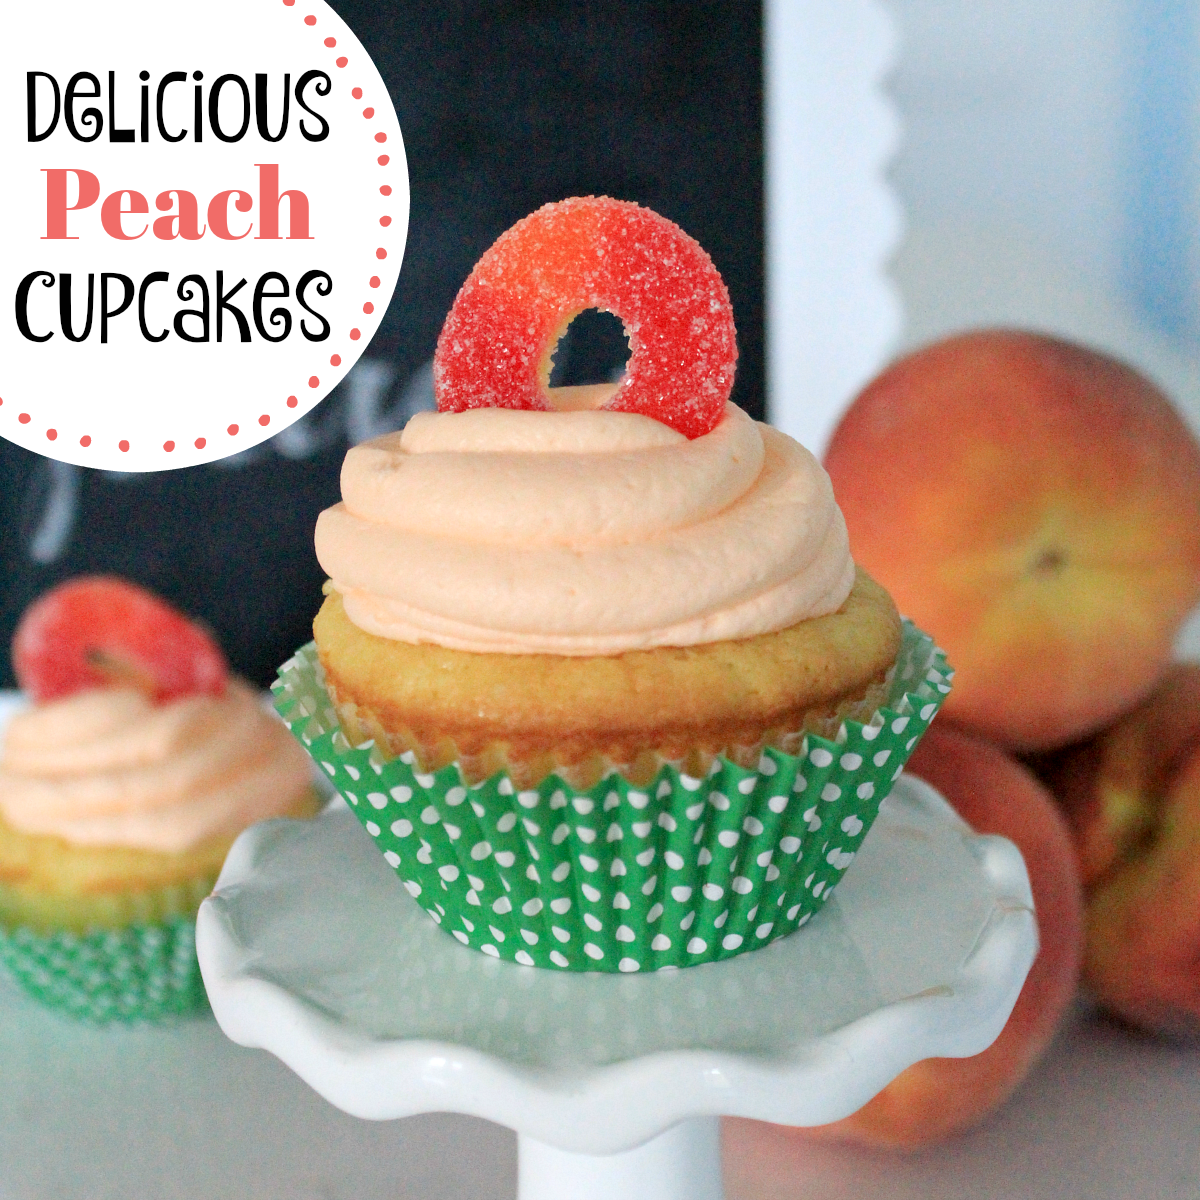 Delicious Peach Cupcakes: